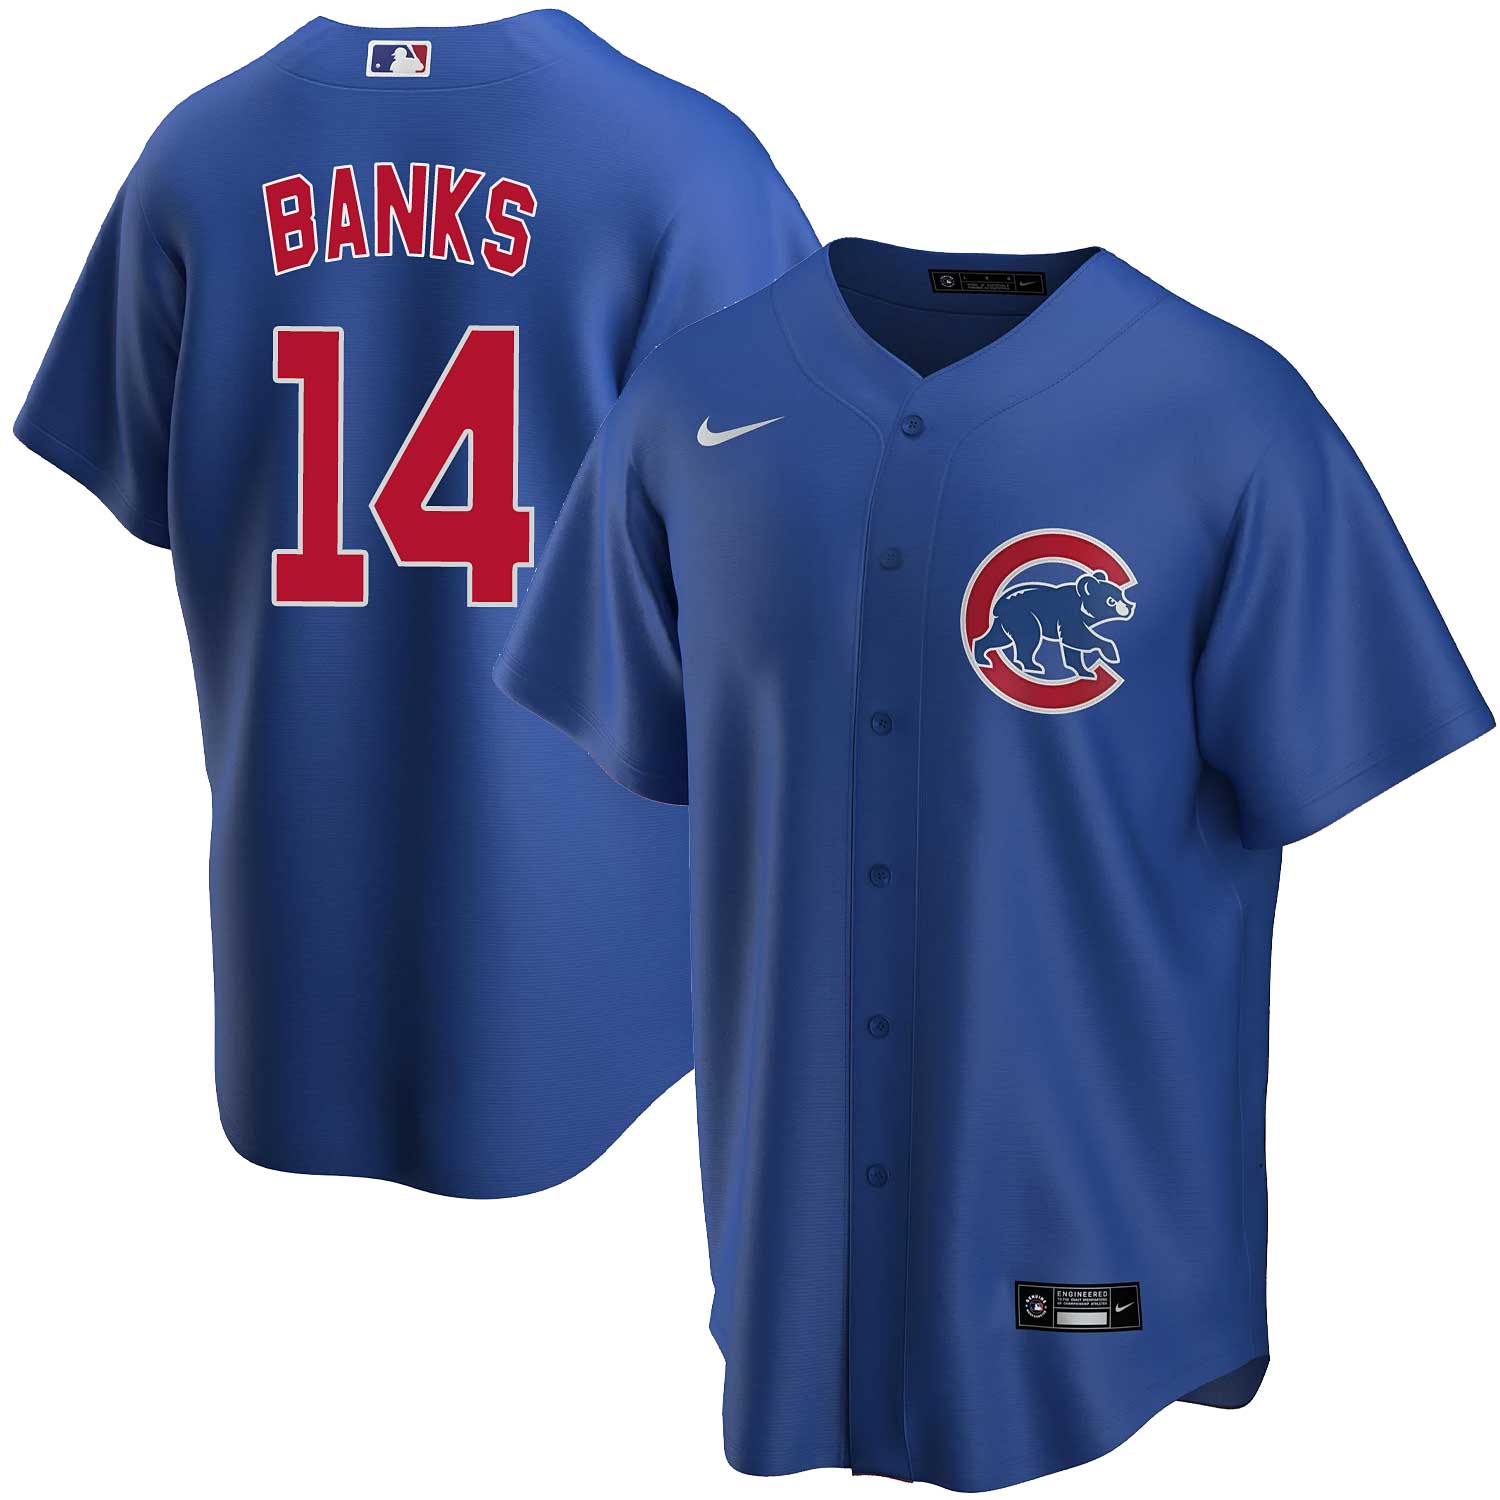 Official Ernie Banks Jersey, Ernie Banks Shirts, Baseball Apparel, Ernie  Banks Gear